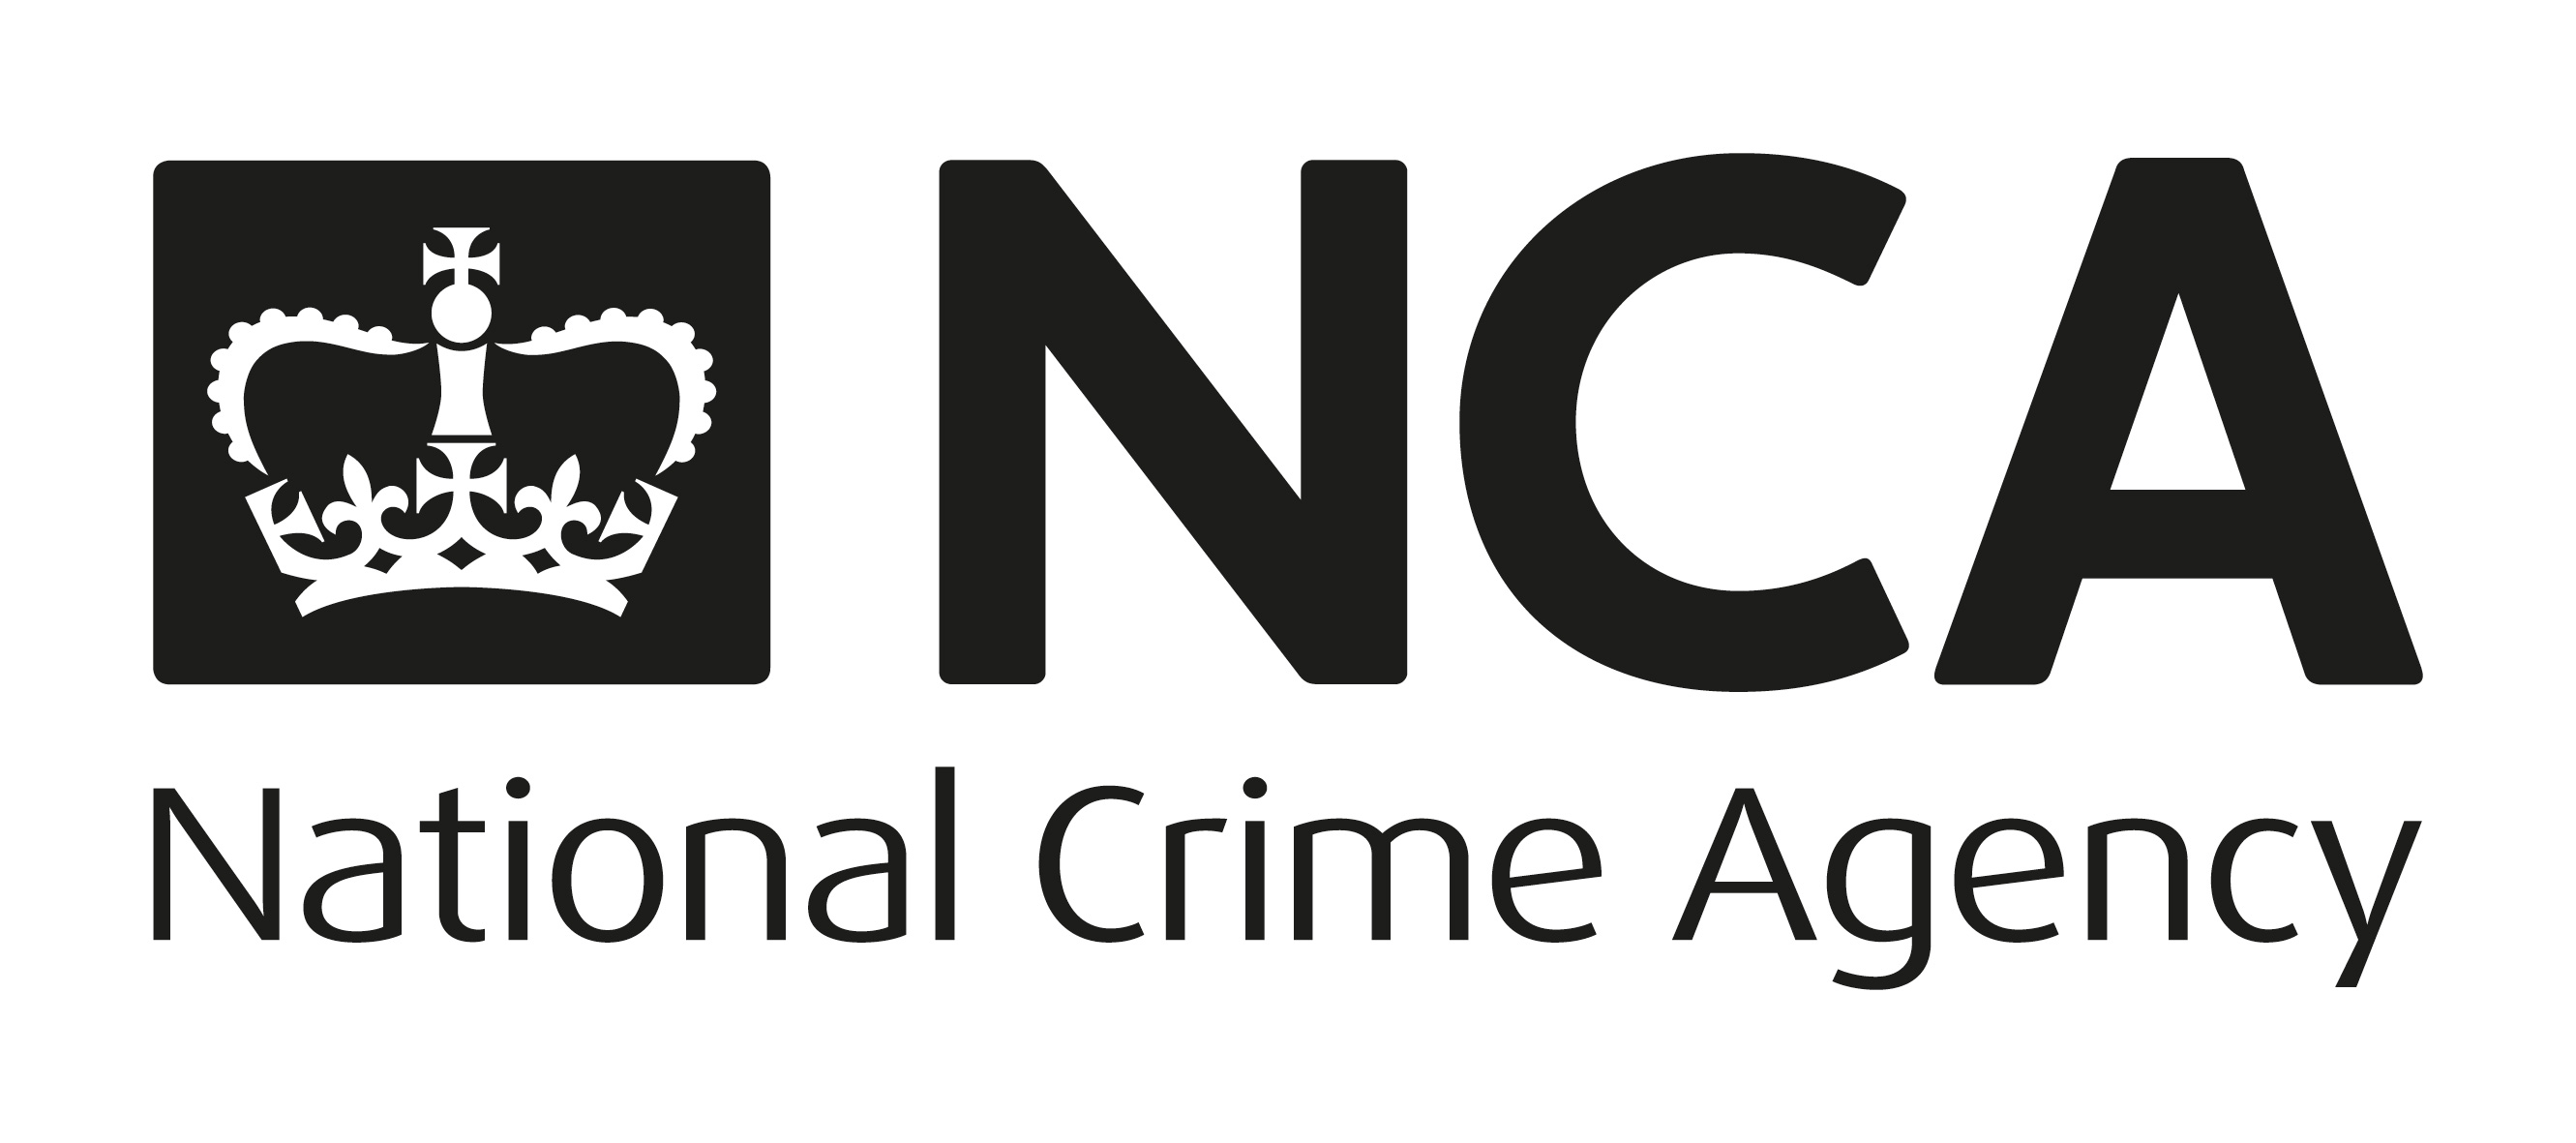 National Crime Agency logo